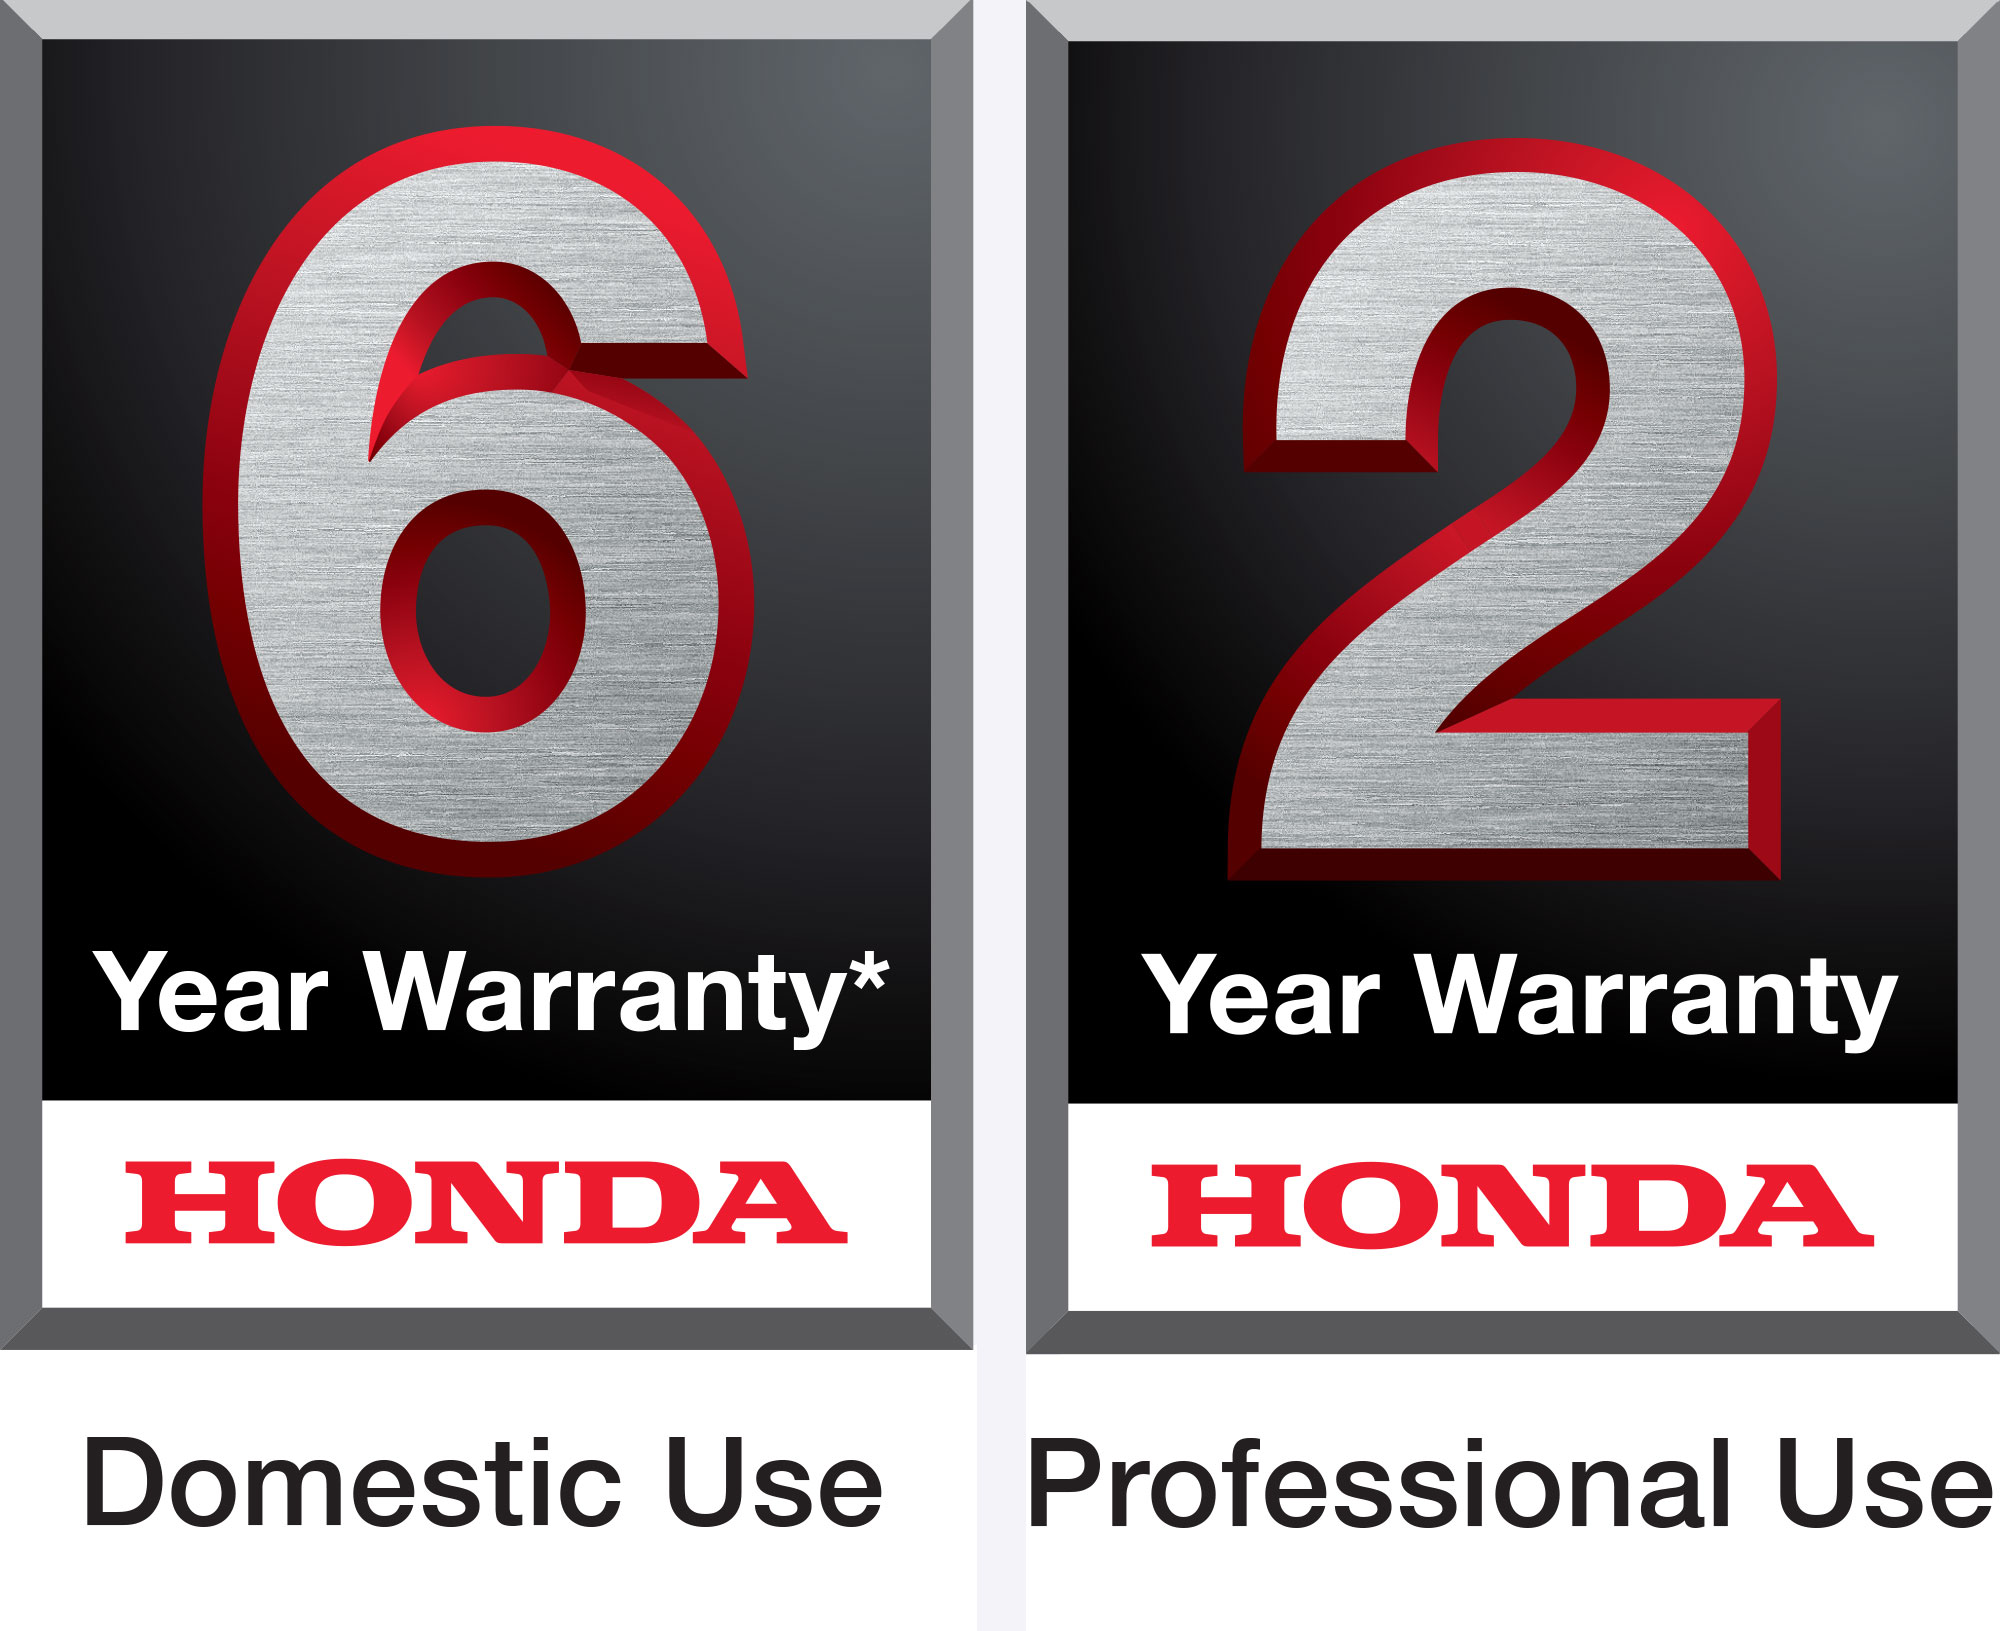 6 year warranty. Honda. Domestic Use. 2 year warranty. Honda. Professional Use.